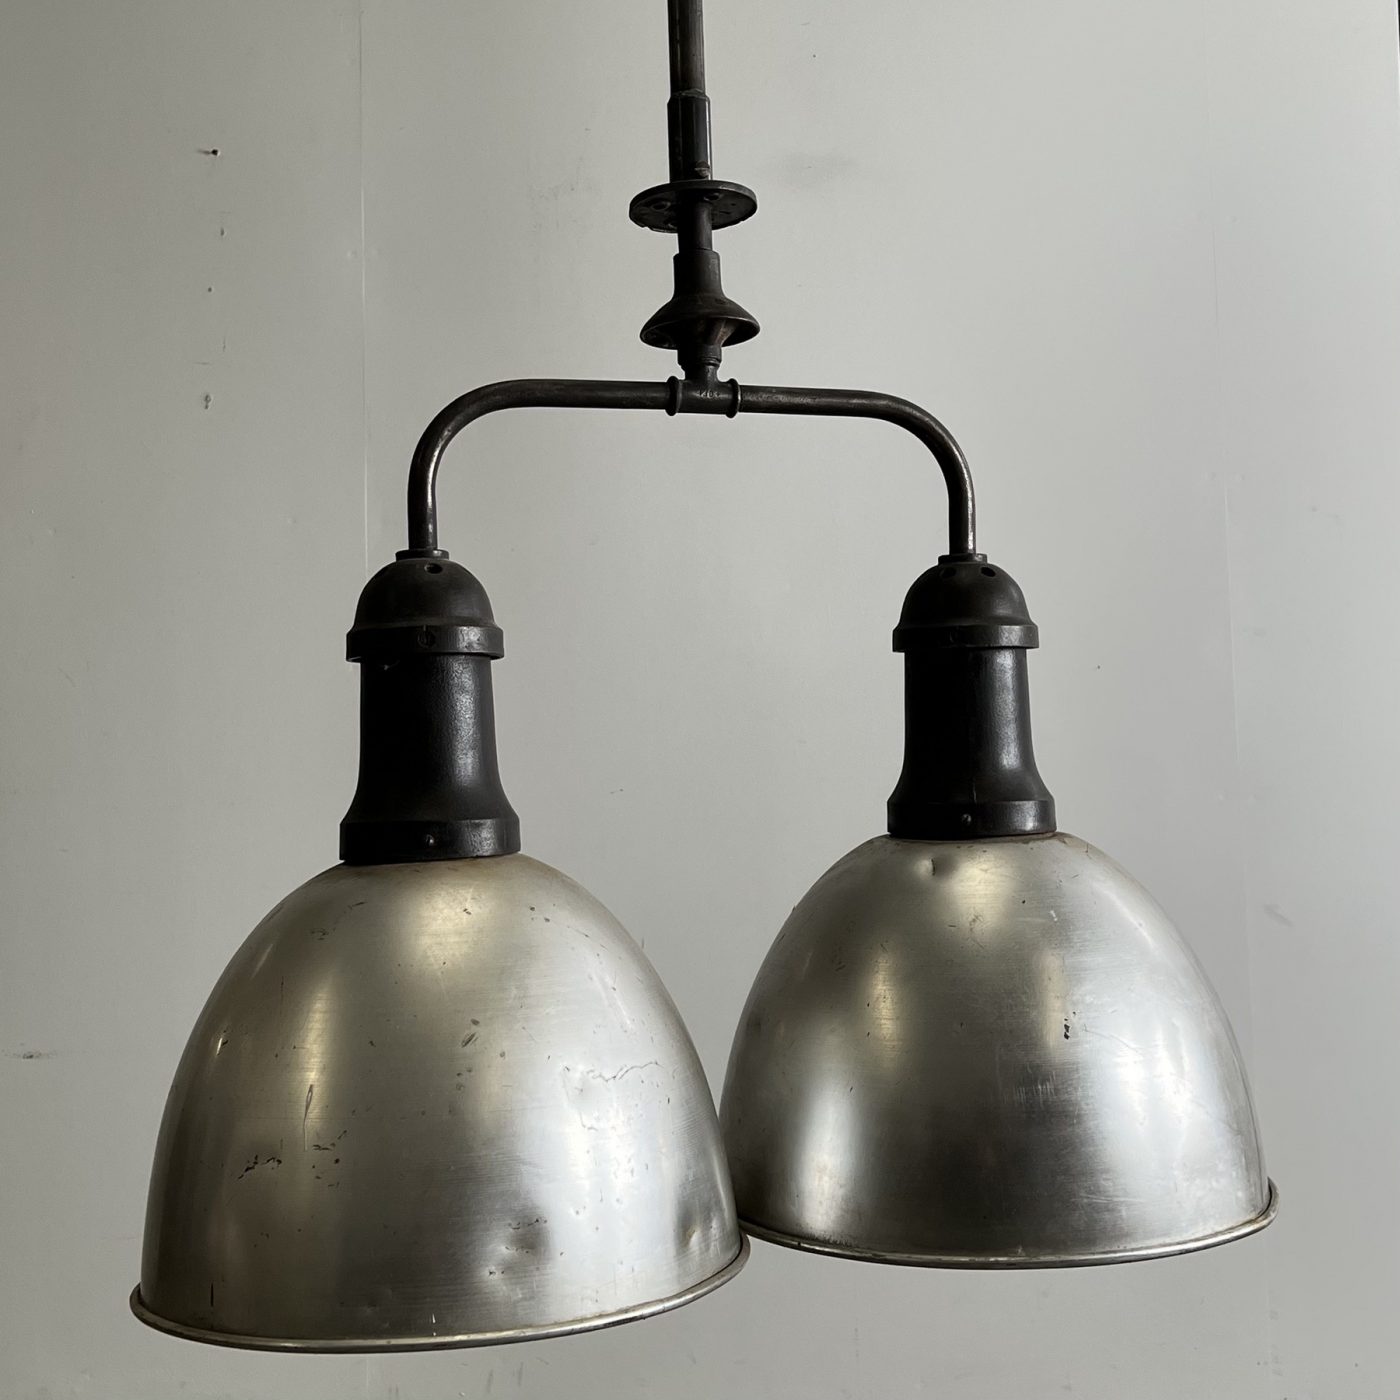 objet-vagabond-industrial-lamp0003